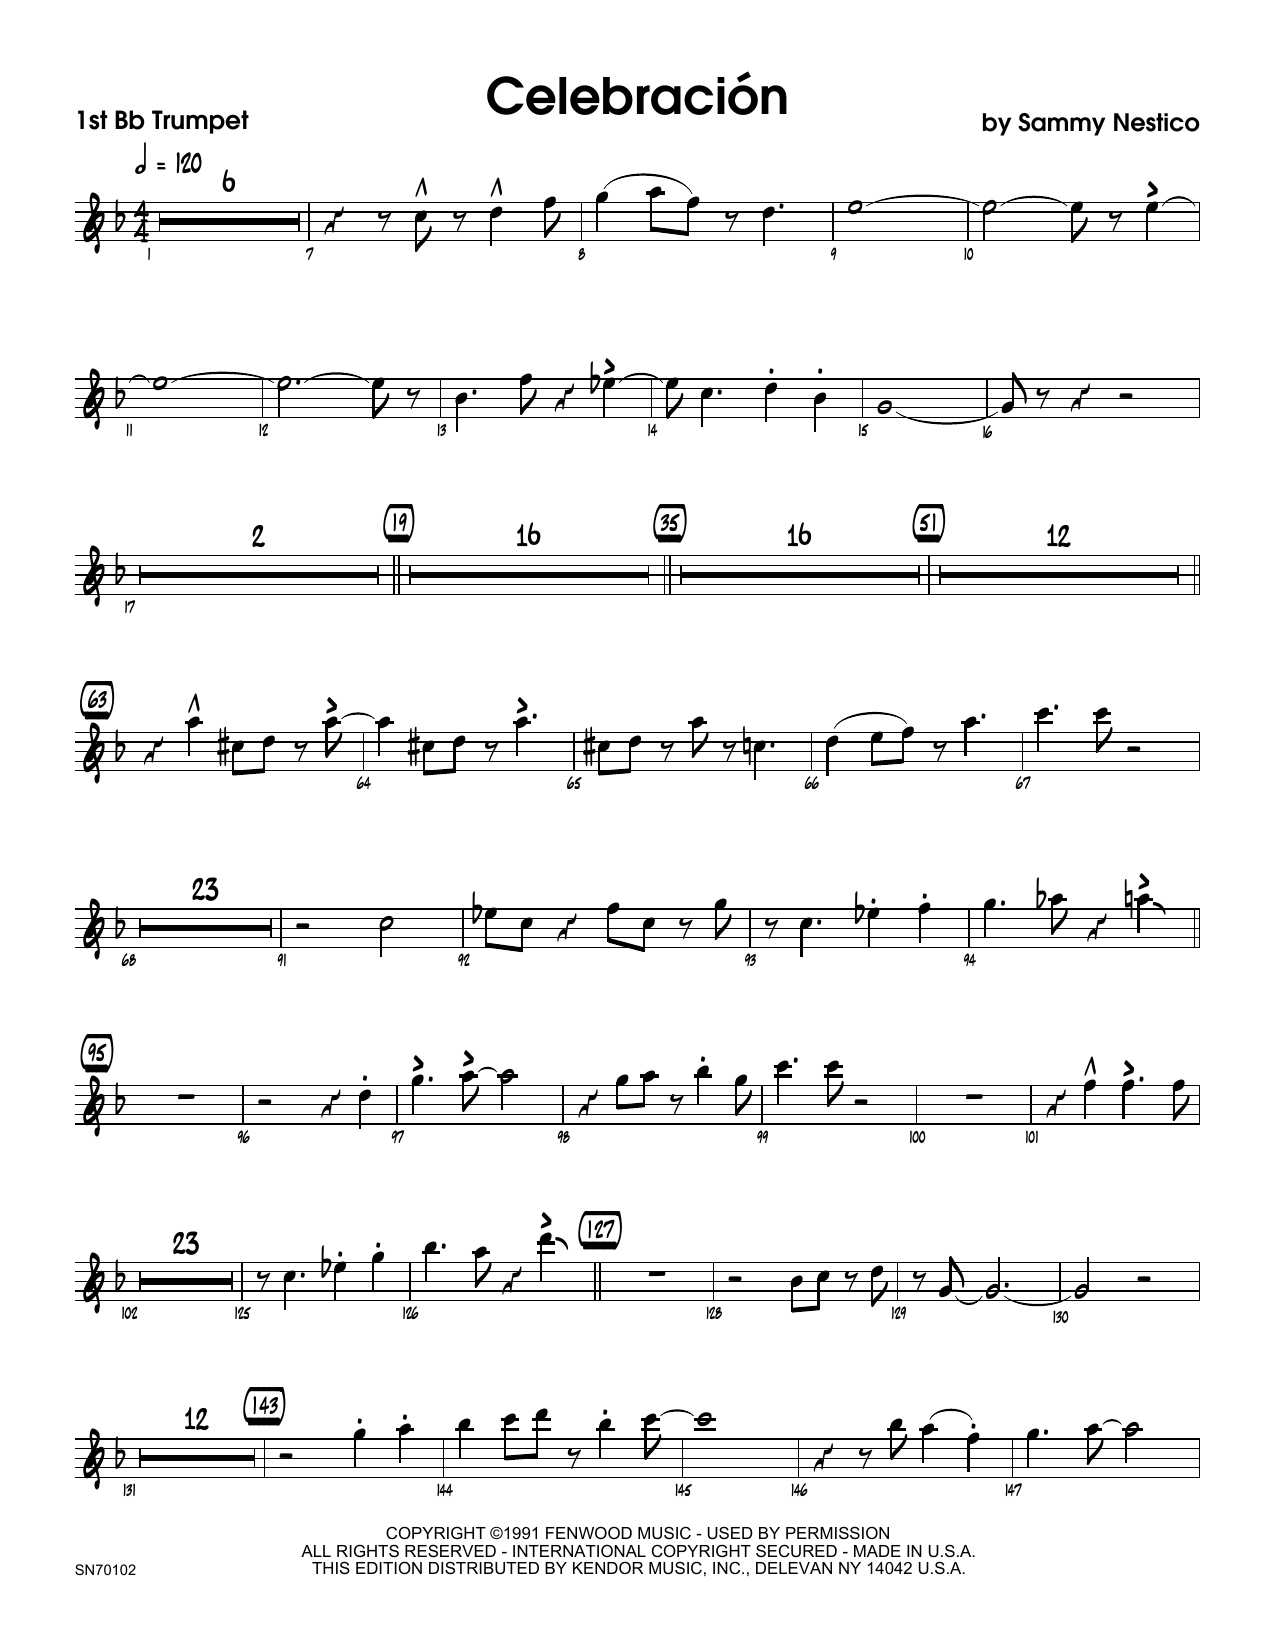 Download Sammy Nestico Celebracion - 1st Bb Trumpet Sheet Music